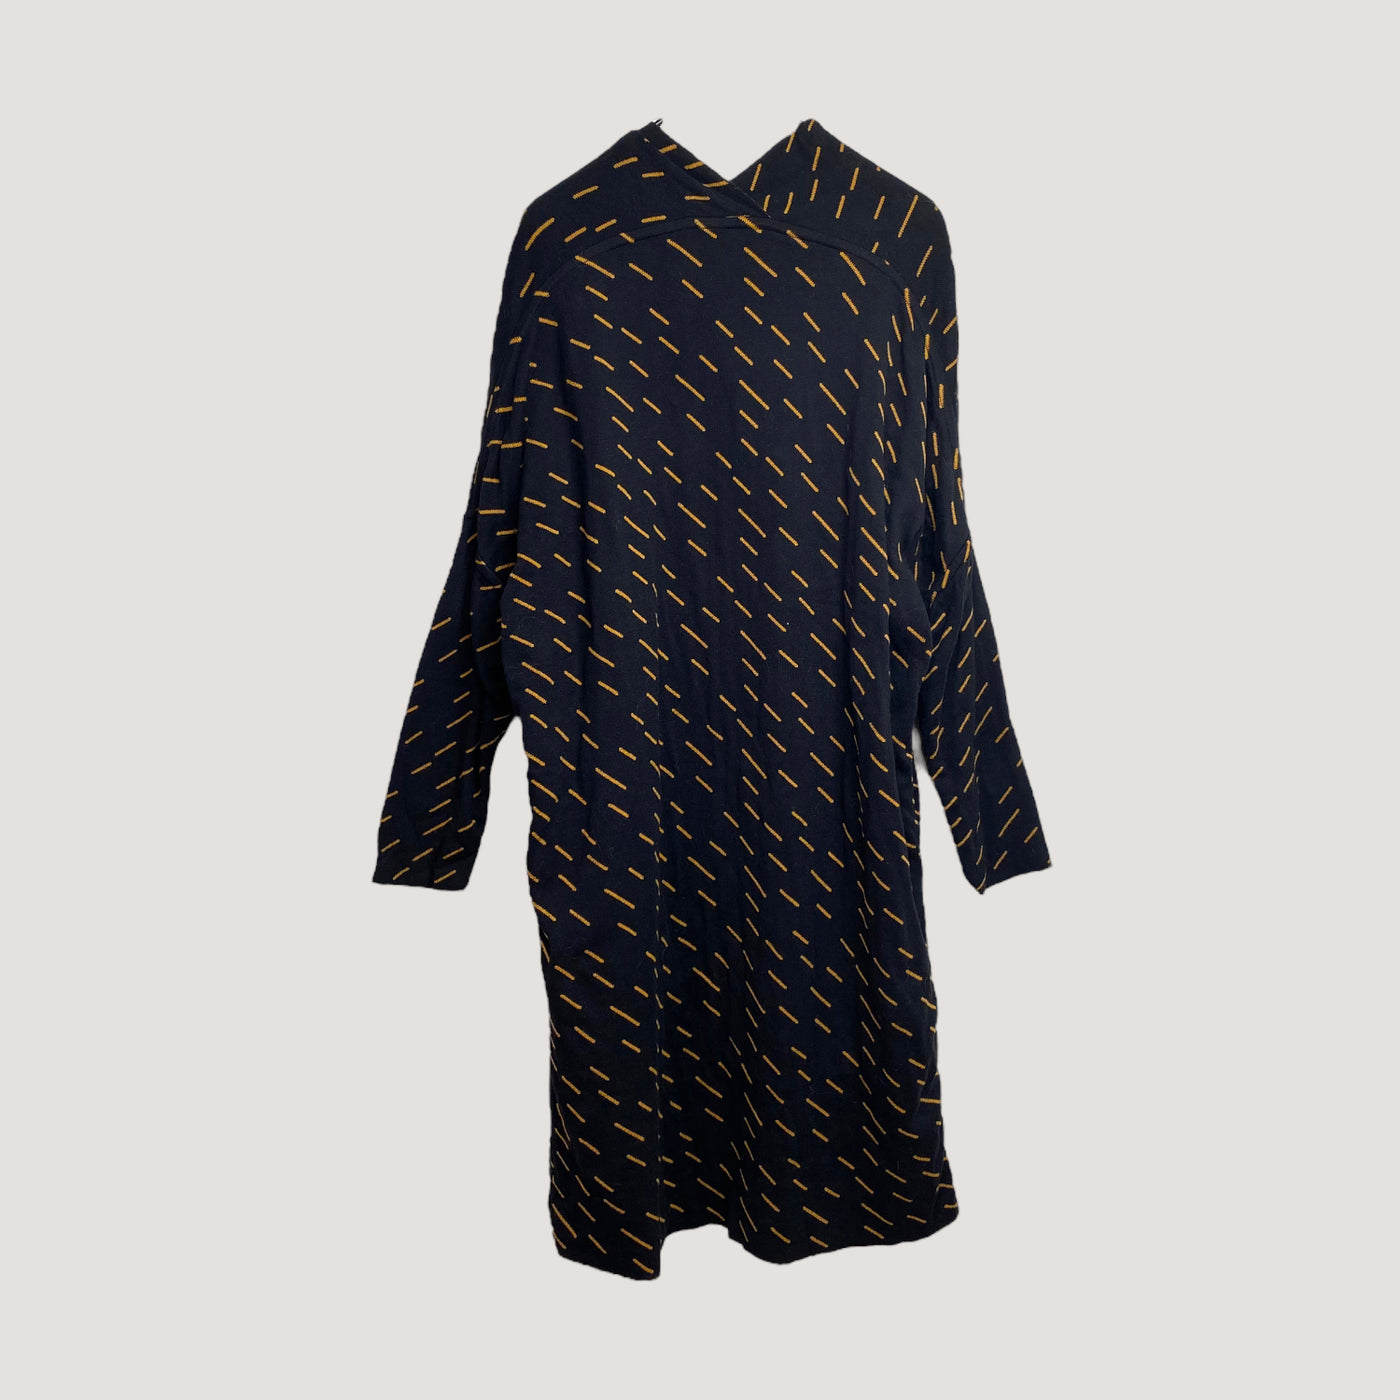 Papu long knitted cardigan, black/range | woman M/L